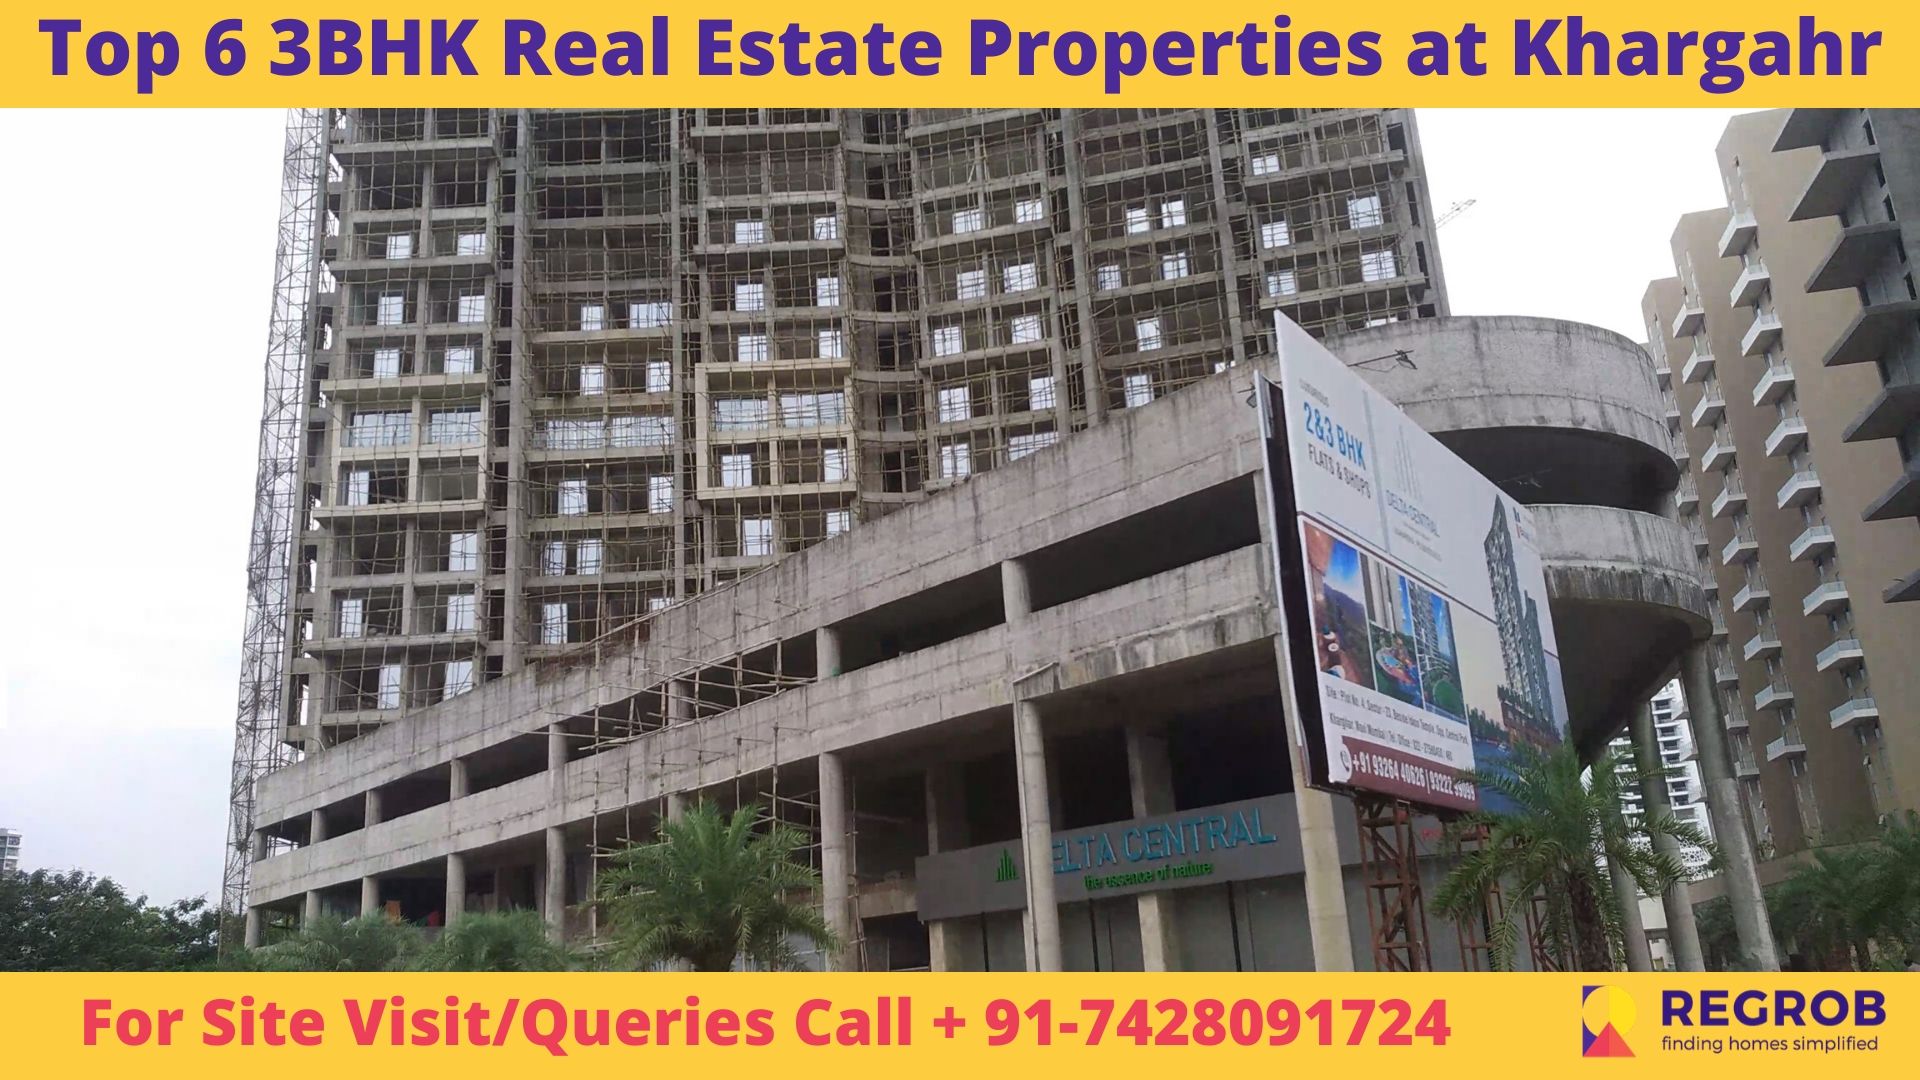 Top 6 3BHK Real Estate Properties at Khargahr